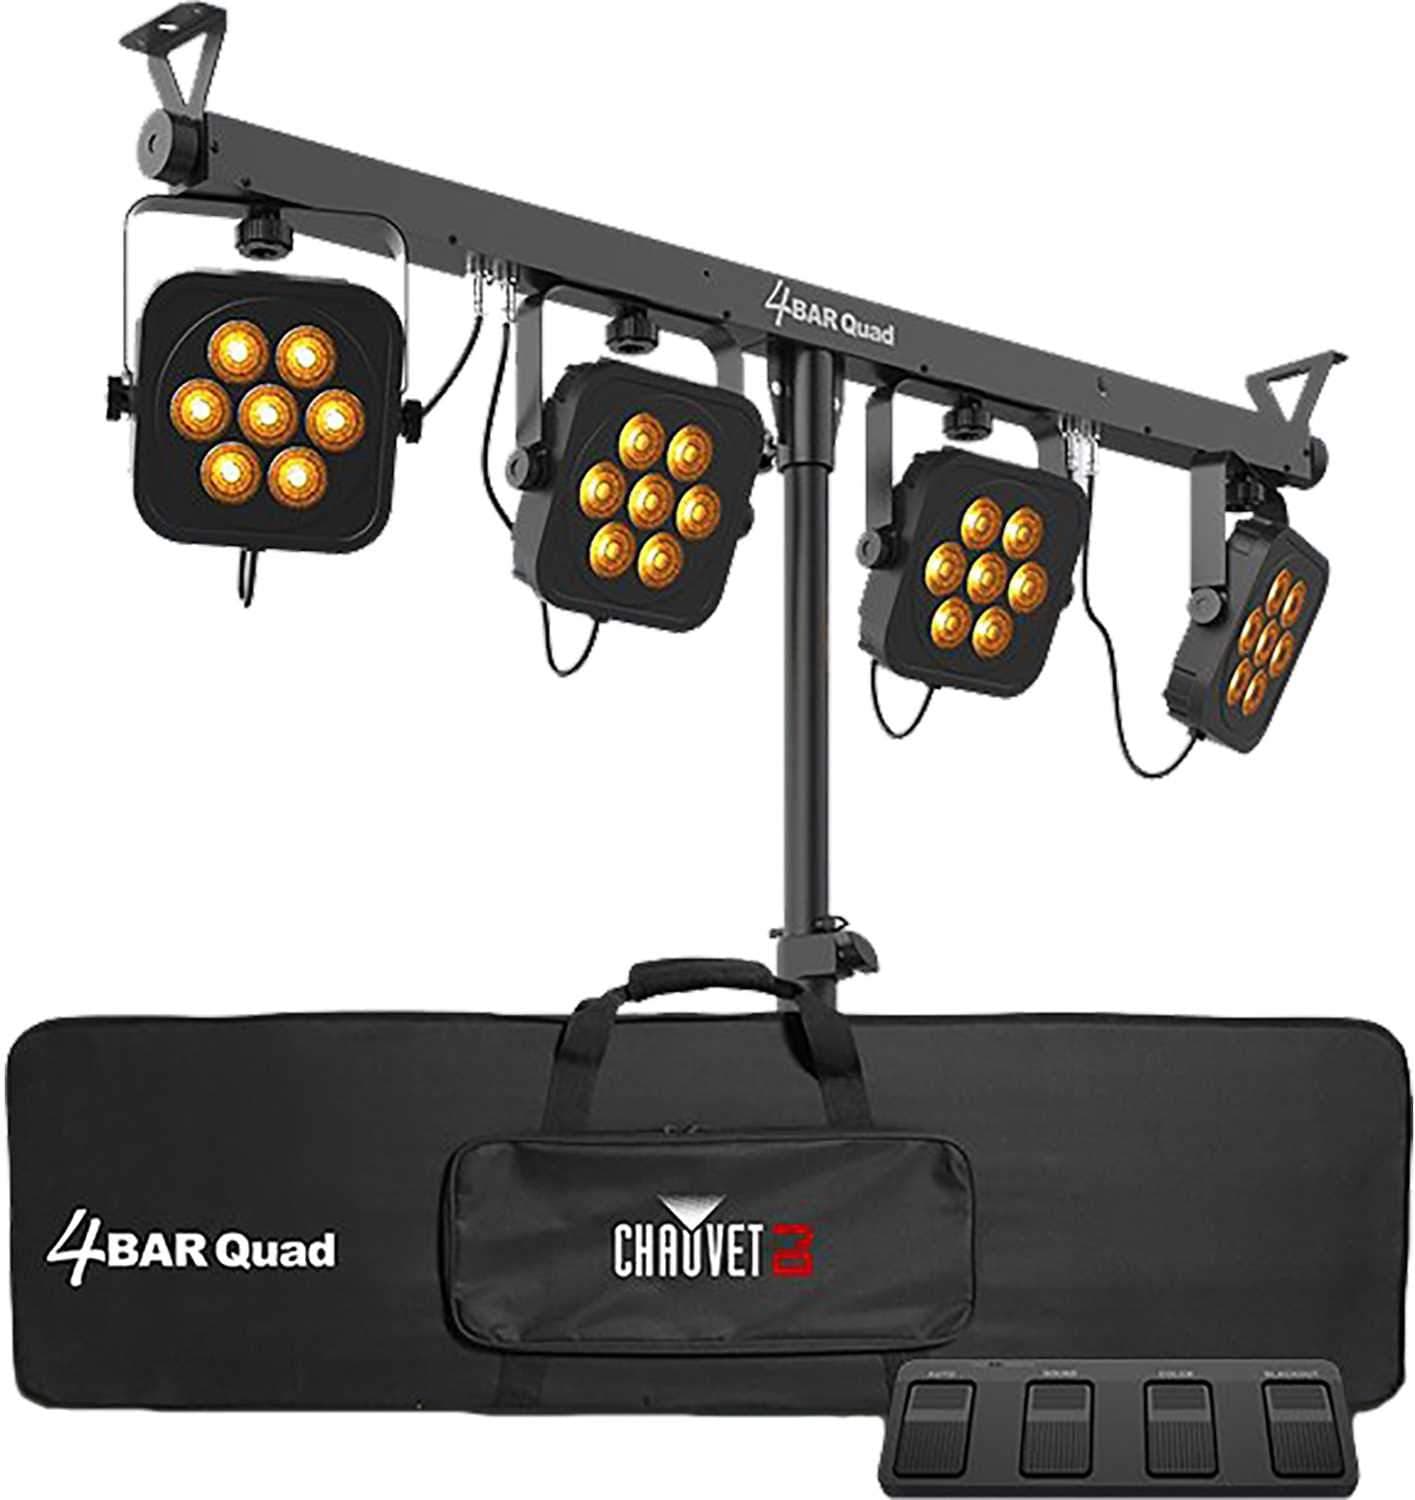 Chauvet 4BAR Quad DMX RGBA LED Wash Light System - ProSound and Stage Lighting